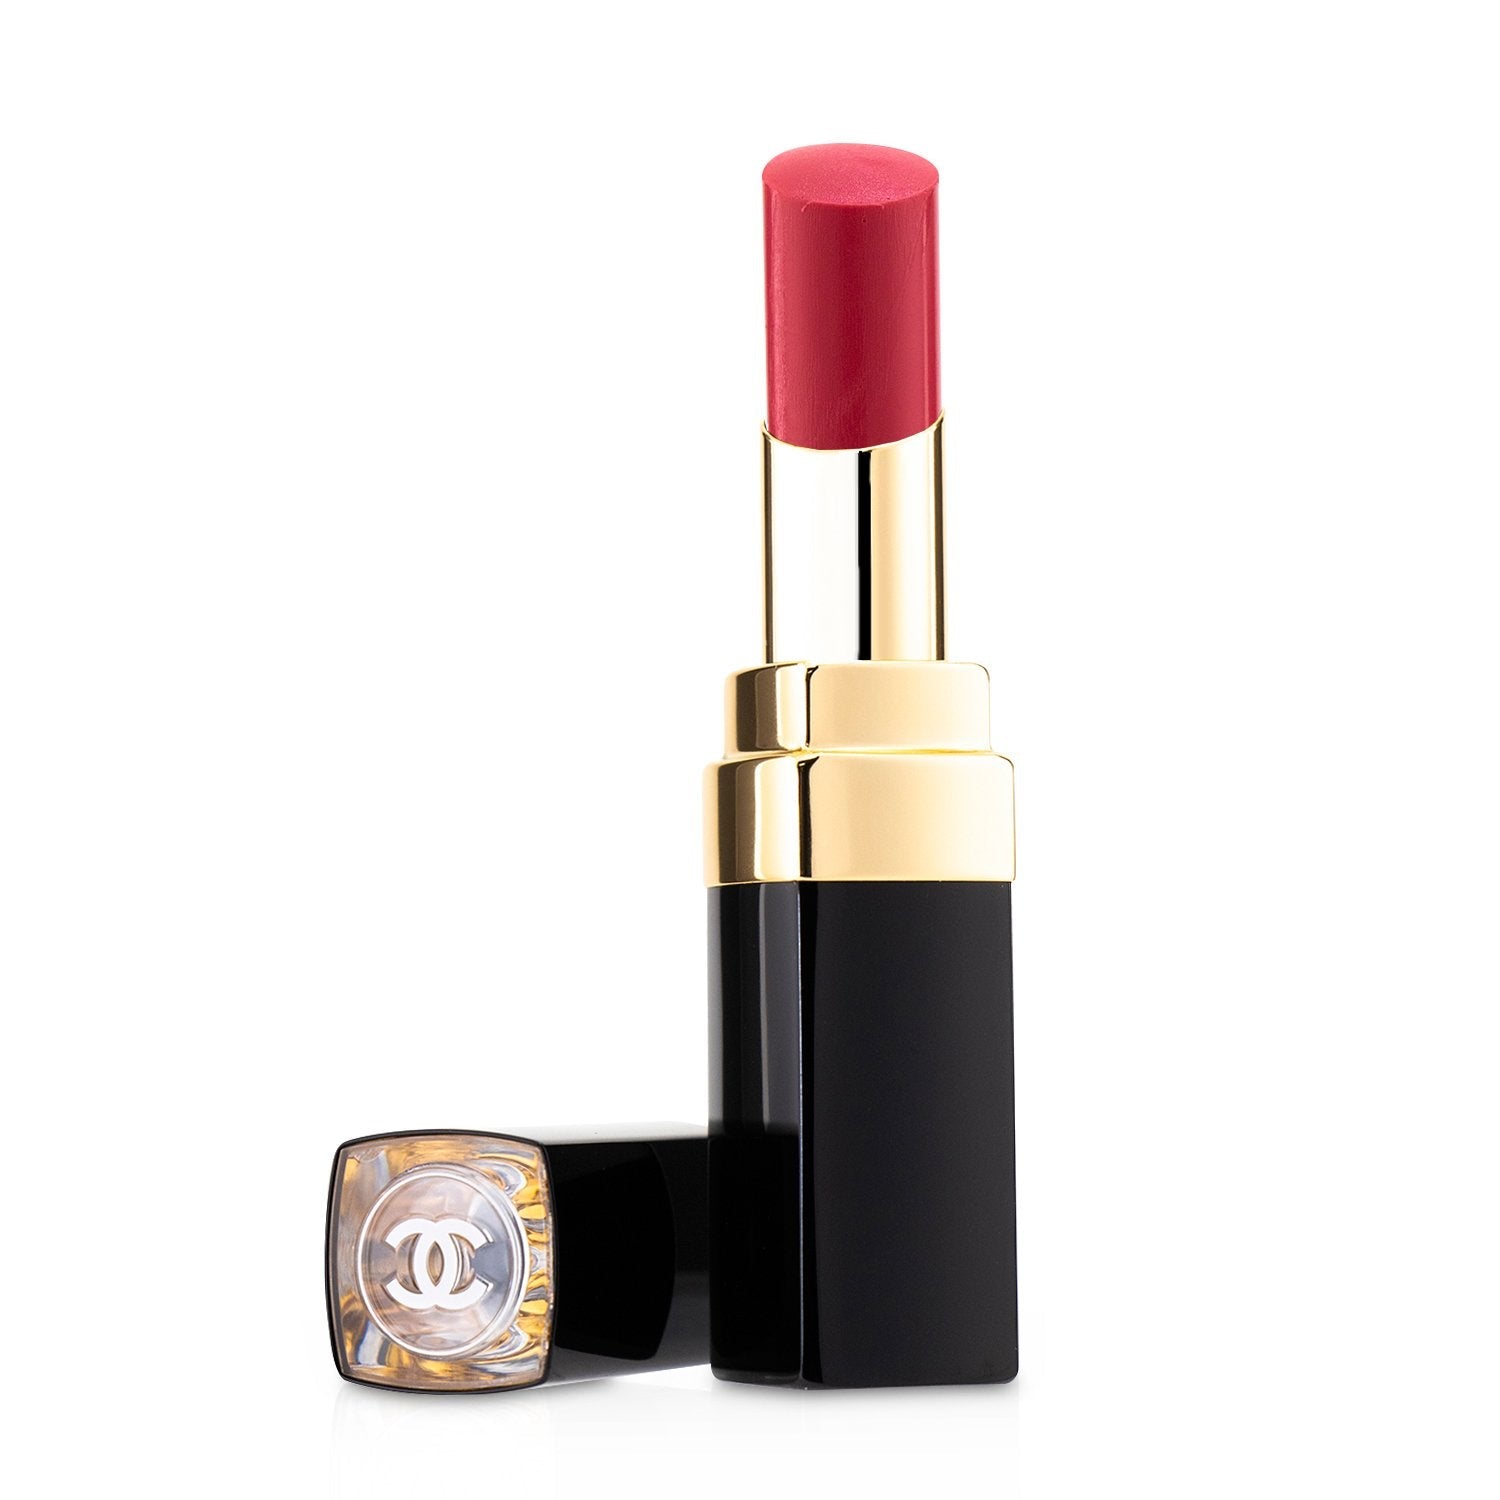 Chanel Rouge Coco Flash Hydrating Vibrant Shine Lip Colour - # 72